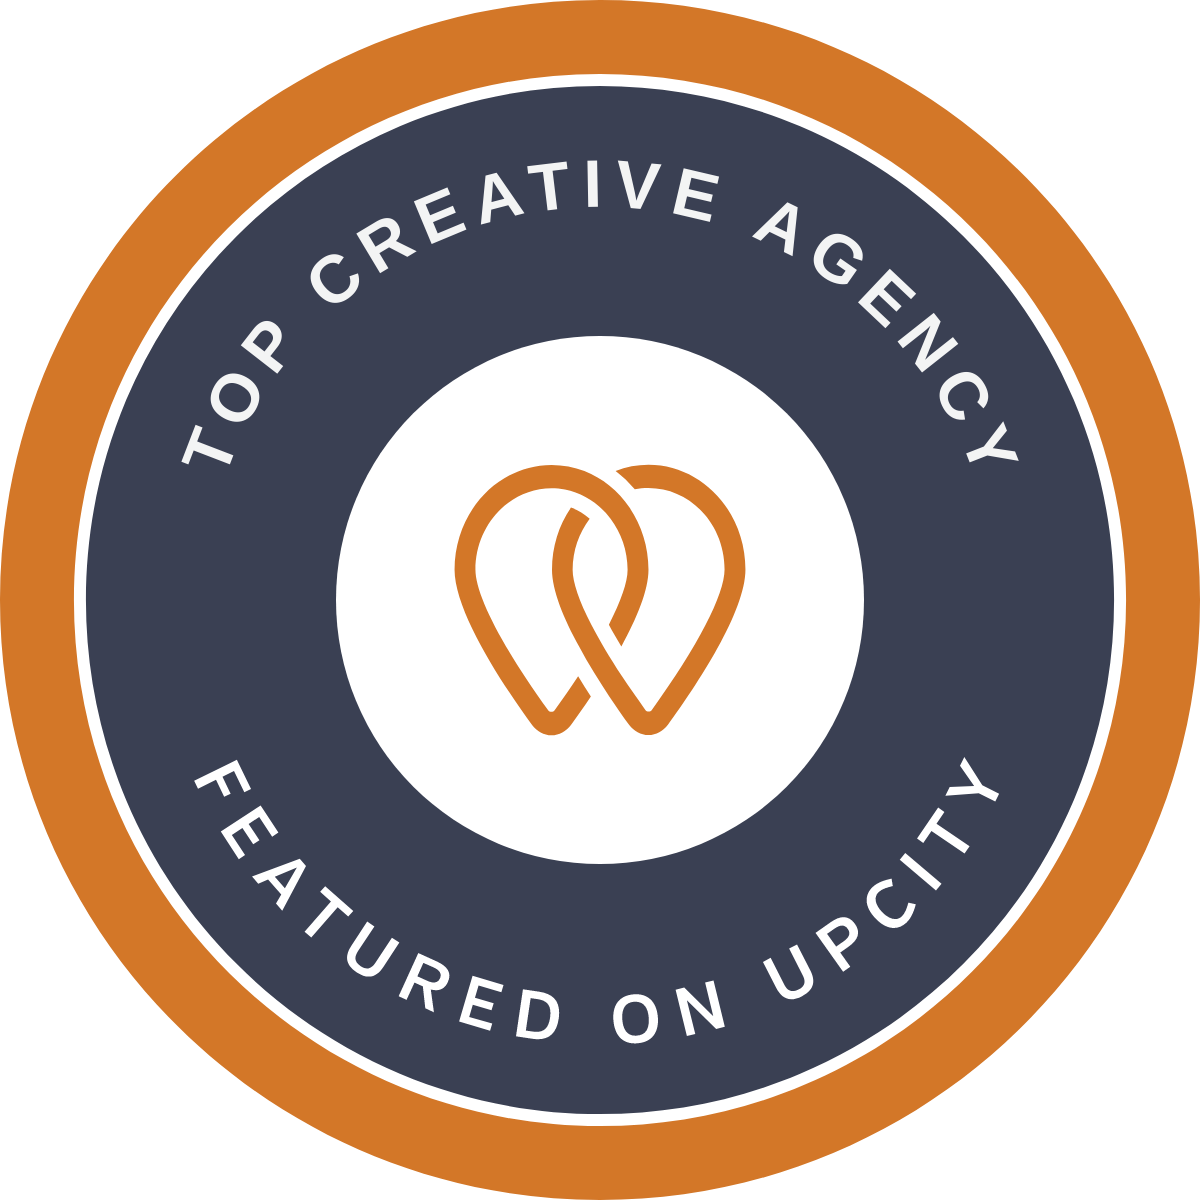 Hamilton, Ontario, CanadaのエージェンシーCodeMasters AgencyはTop Creative Agency賞を獲得しています